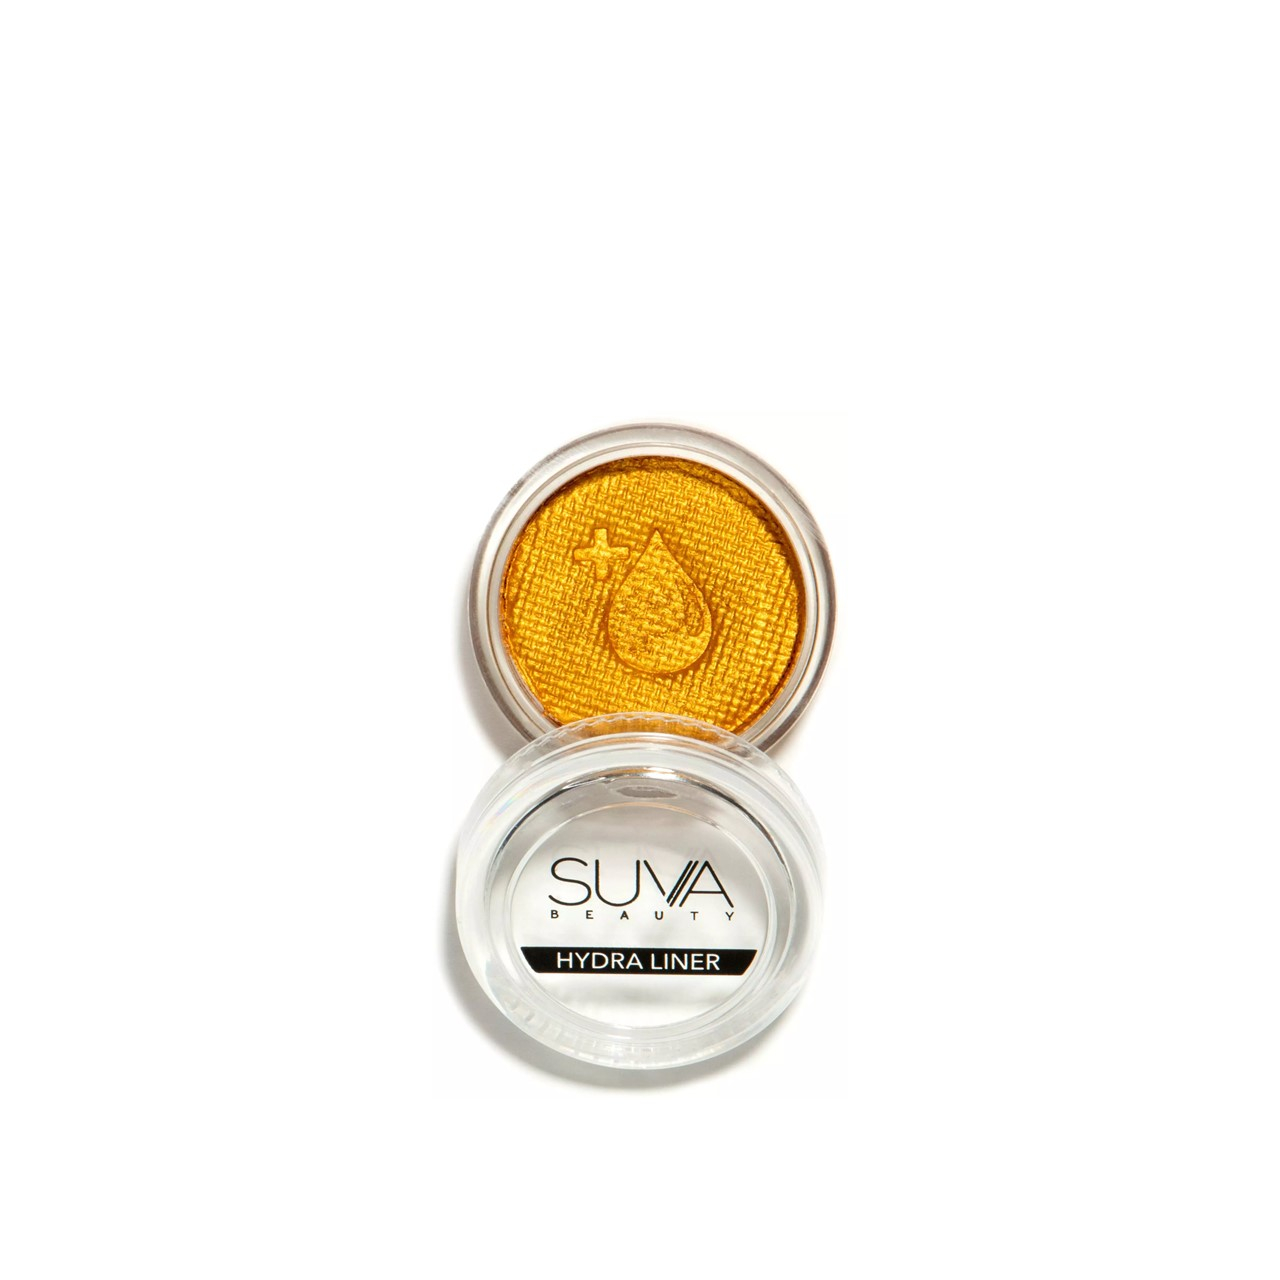 SUVA Beauty Hydra Liner Gold Digger Chrome Cake Eyeliner 10g (0.35oz)